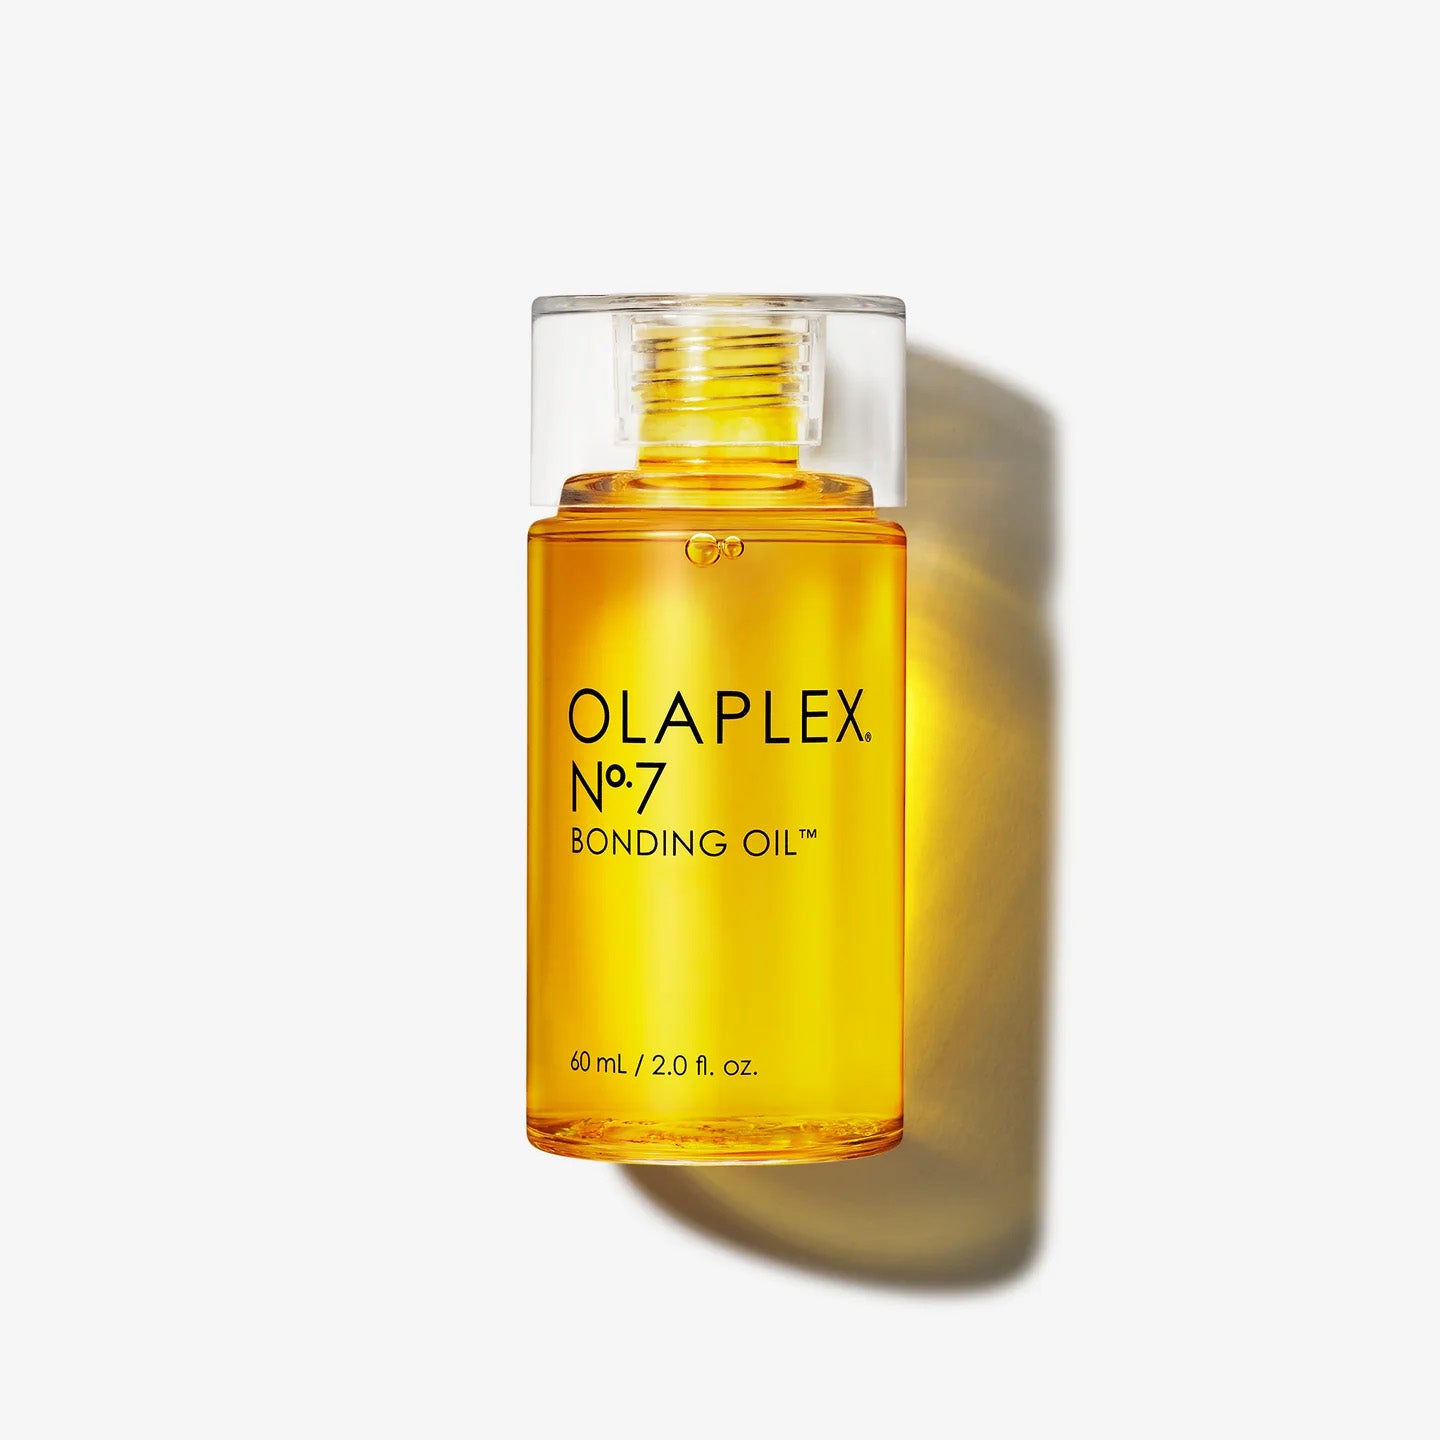 Unbiased Review and Comparison: Olaplex No.7 Bonding Oil Vs. Olaplex No.9  Bond Protector Nourishing Hair Serum